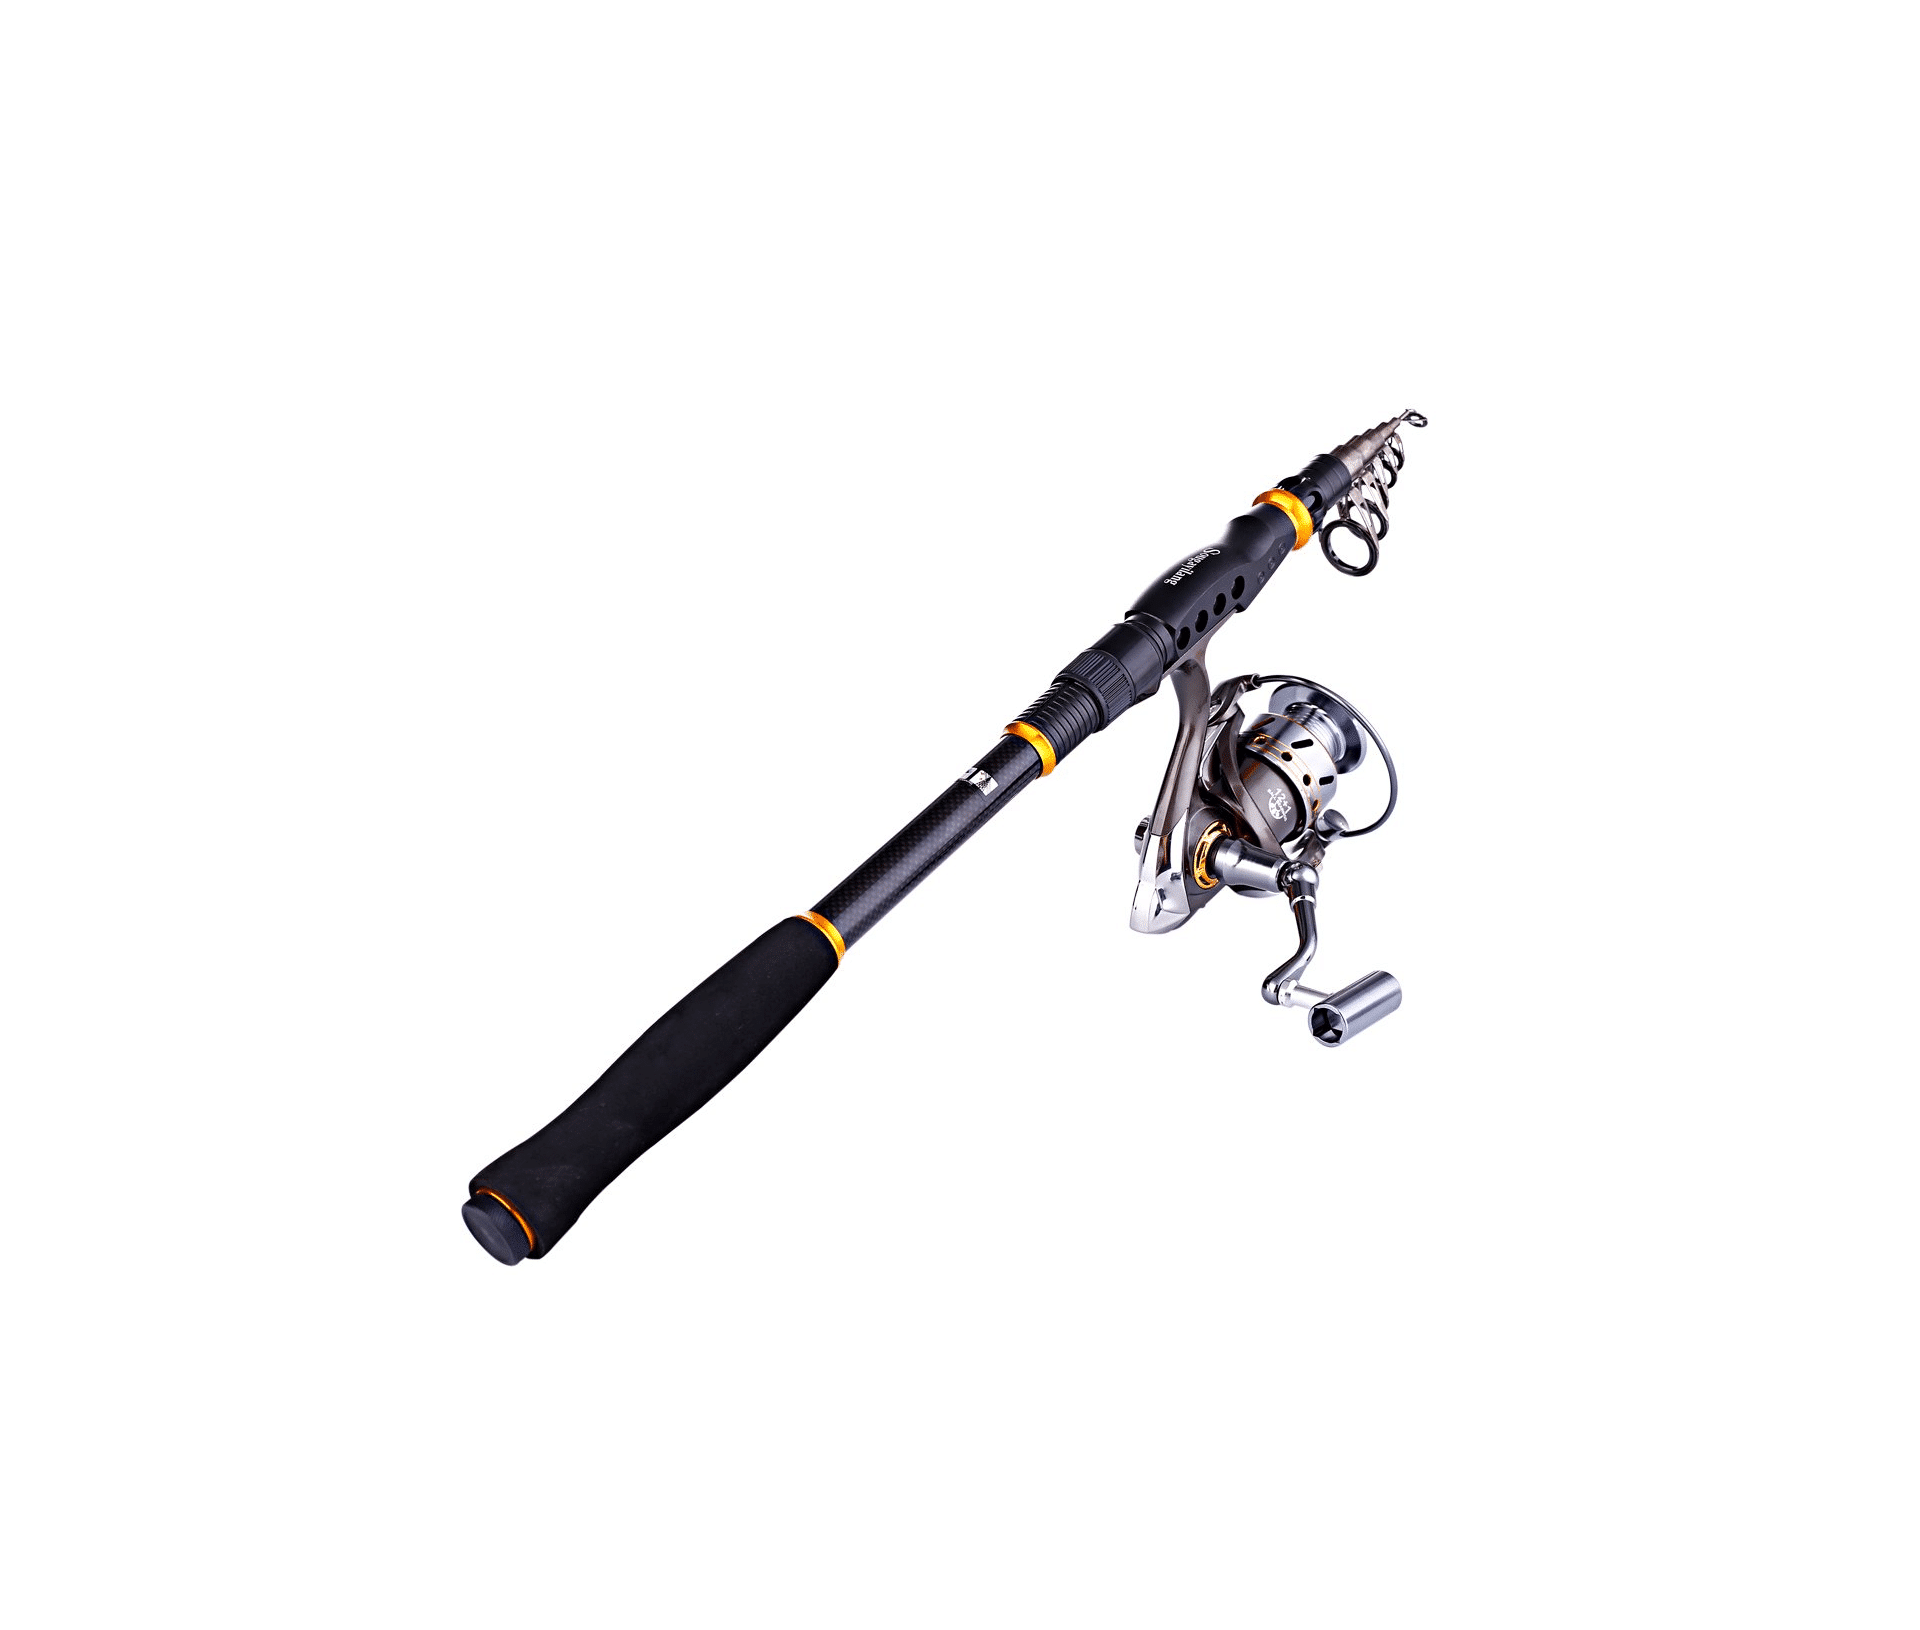 Best Telescopic Fishing Rod